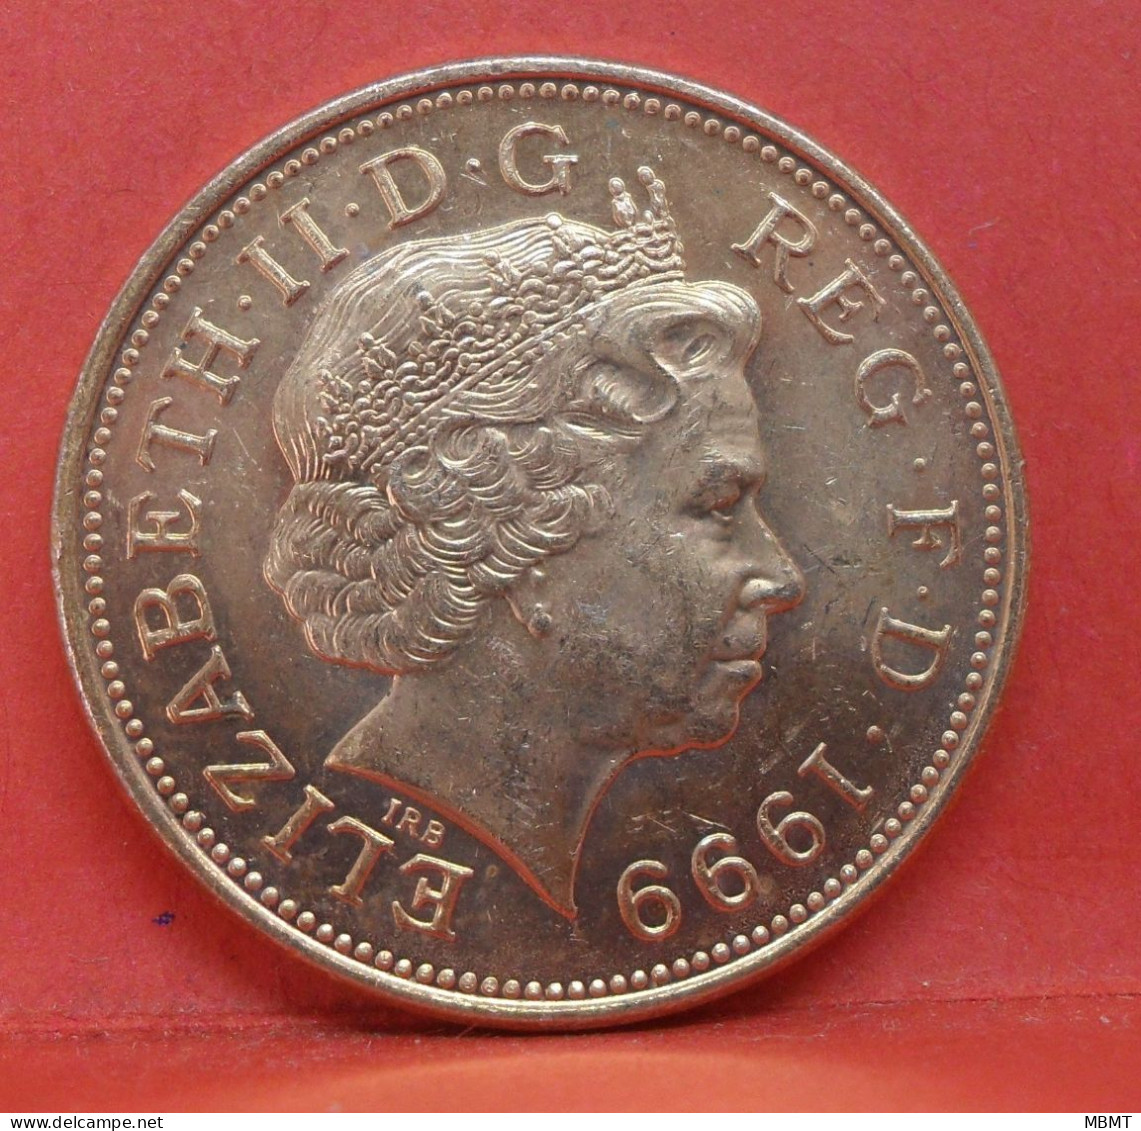 2 Pence 1999 - SUP - Pièce Monnaie Grande-Bretagne - Article N°2720 - 2 Pence & 2 New Pence